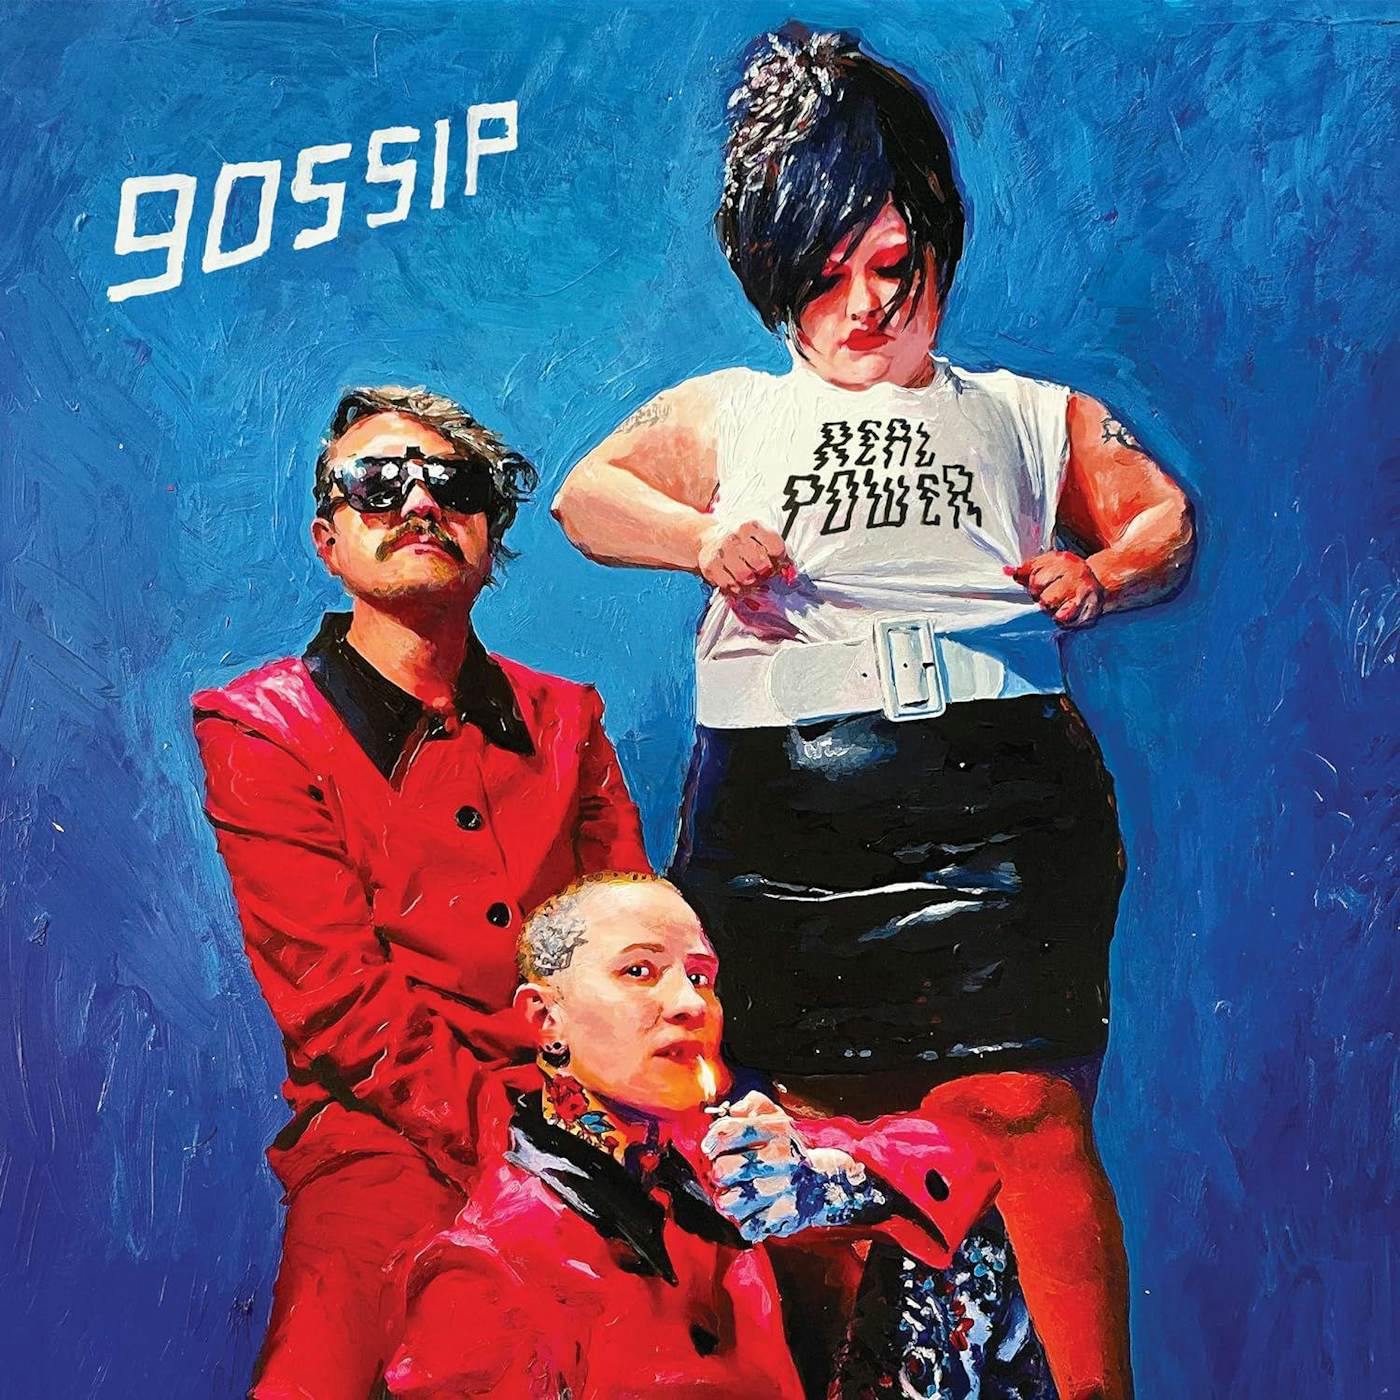 Gossip Real Power Vinyl Record